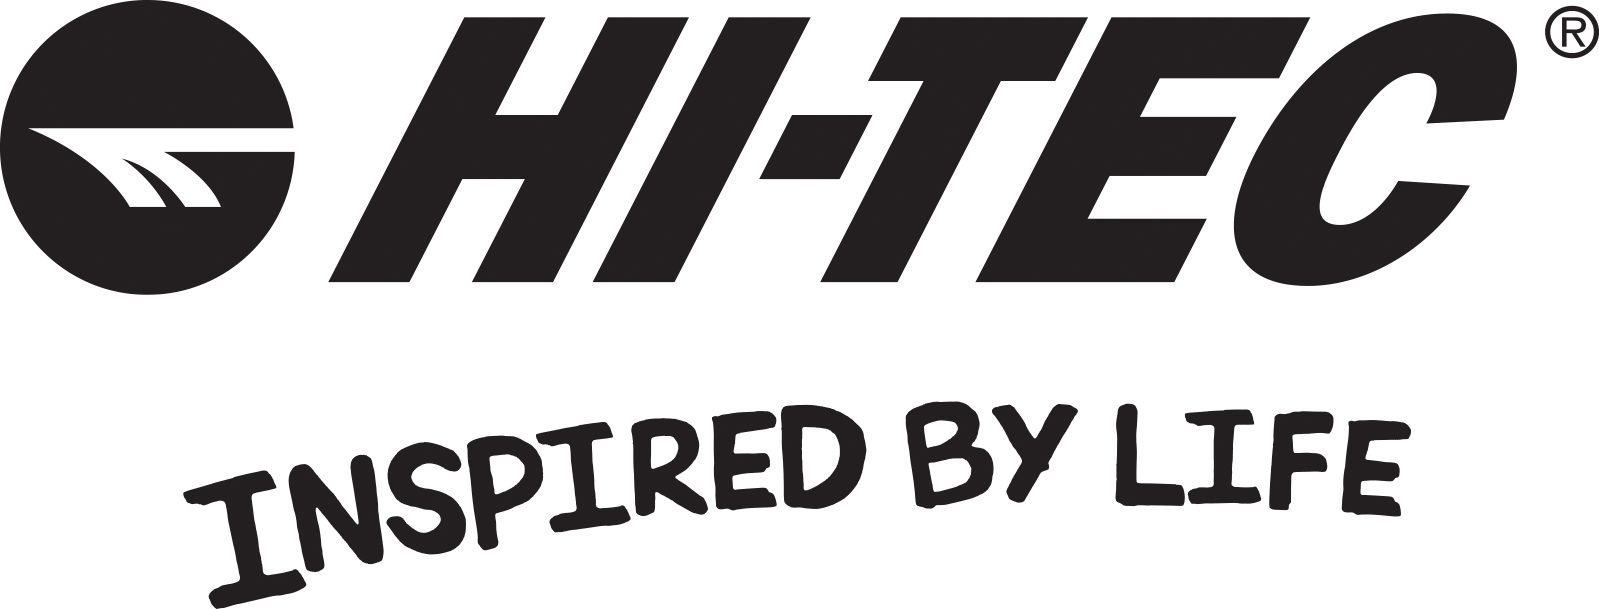 Hi-Tec Logo - brand-hi-hitec-logo-m – KAI FITCHEN | Adventure Journal